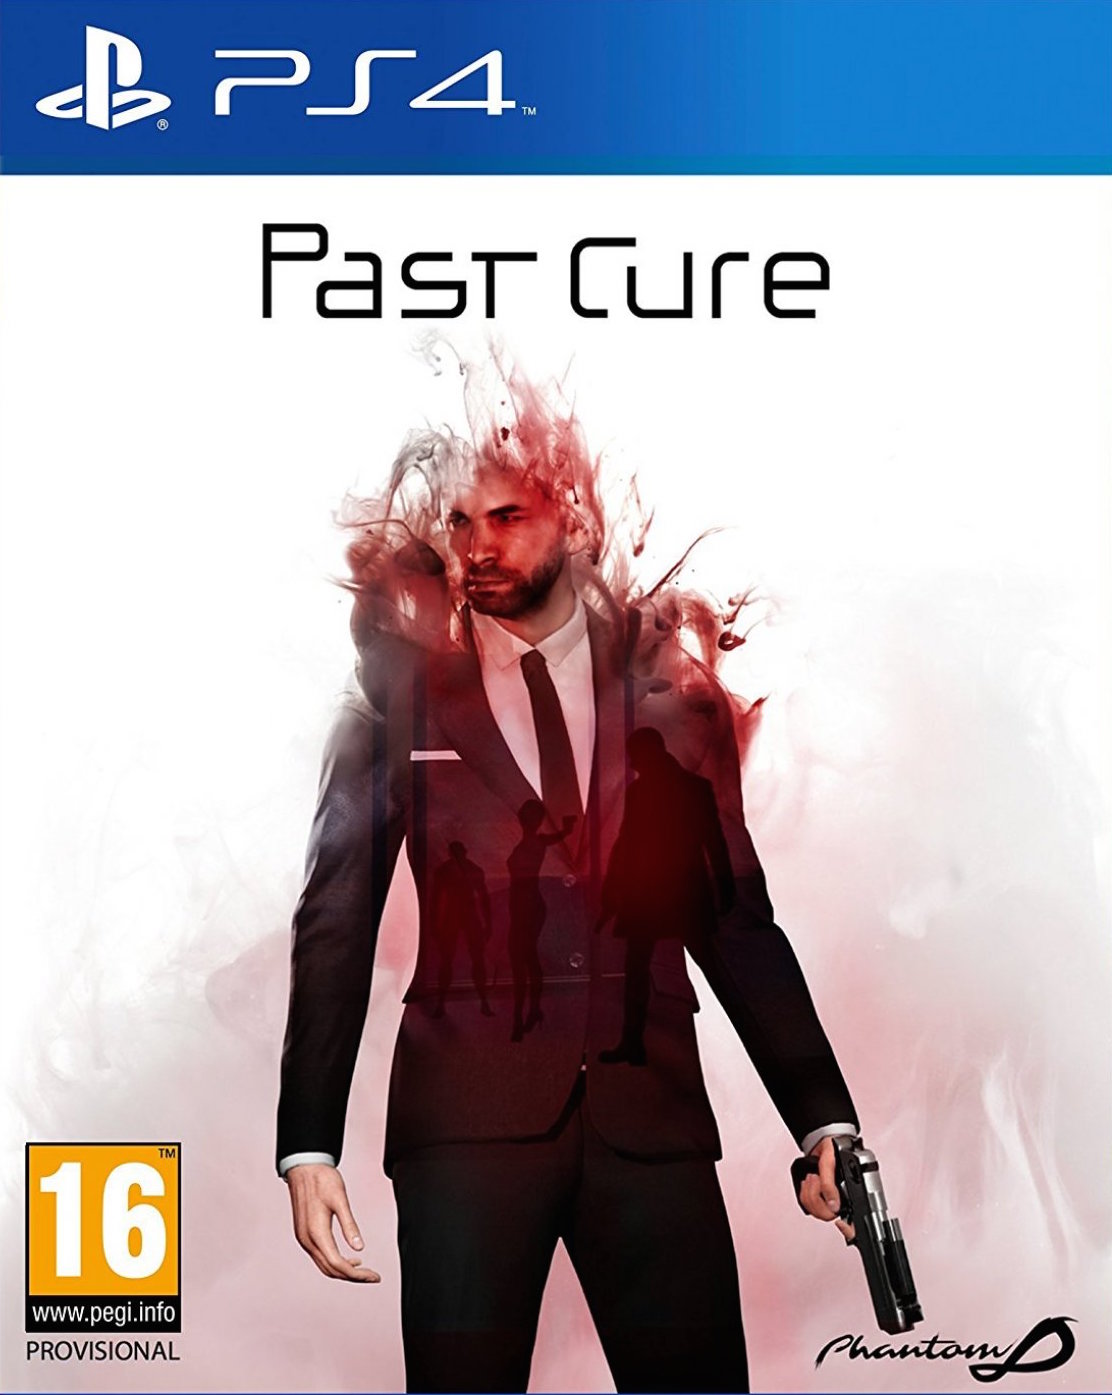 Past Cure (PS4), Phantom D